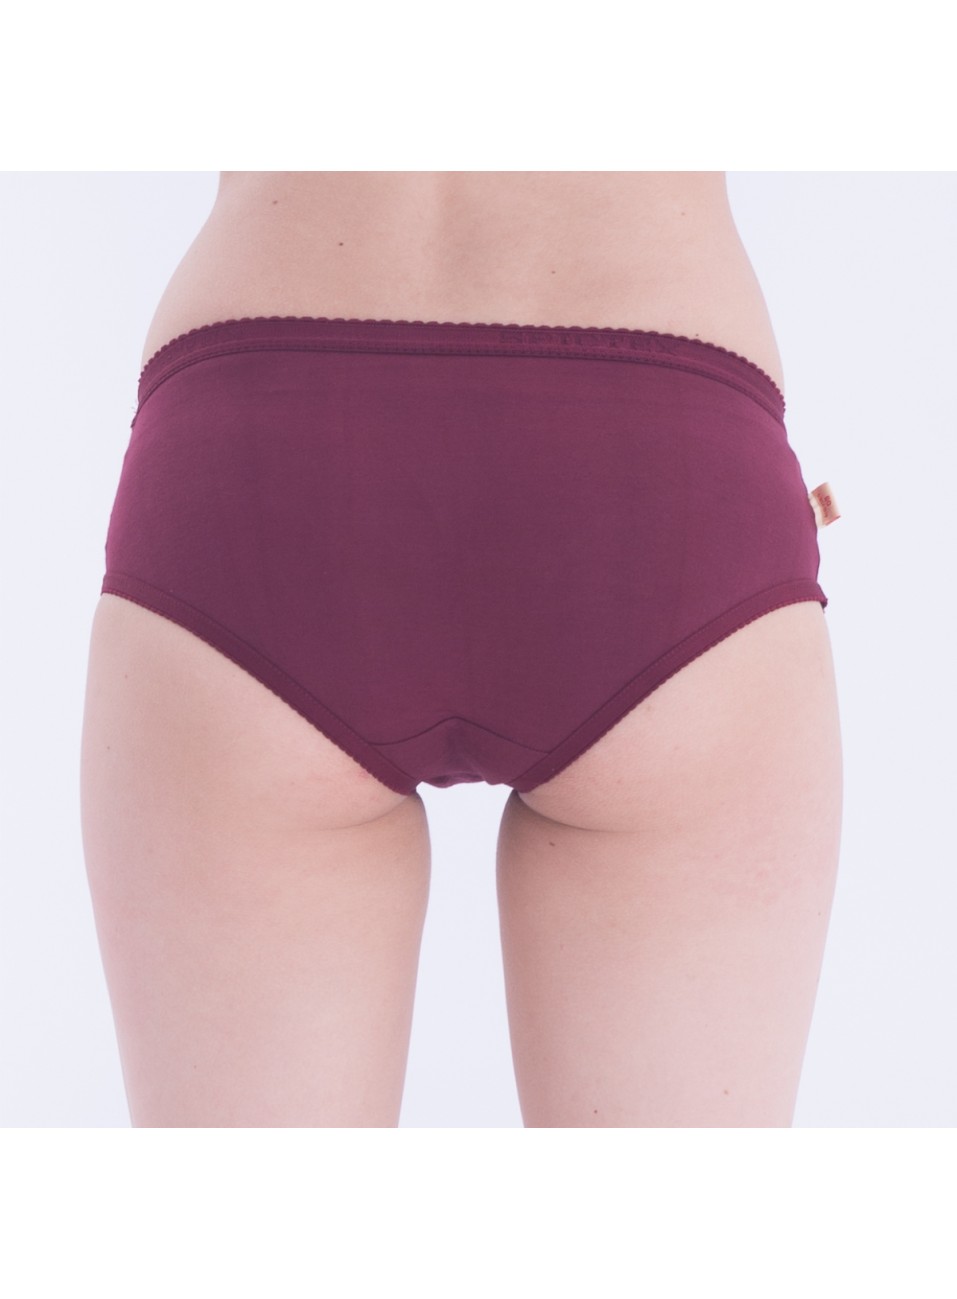 Girls Panties Kavery print (Inner Elastic) - 1 Pcs Pack